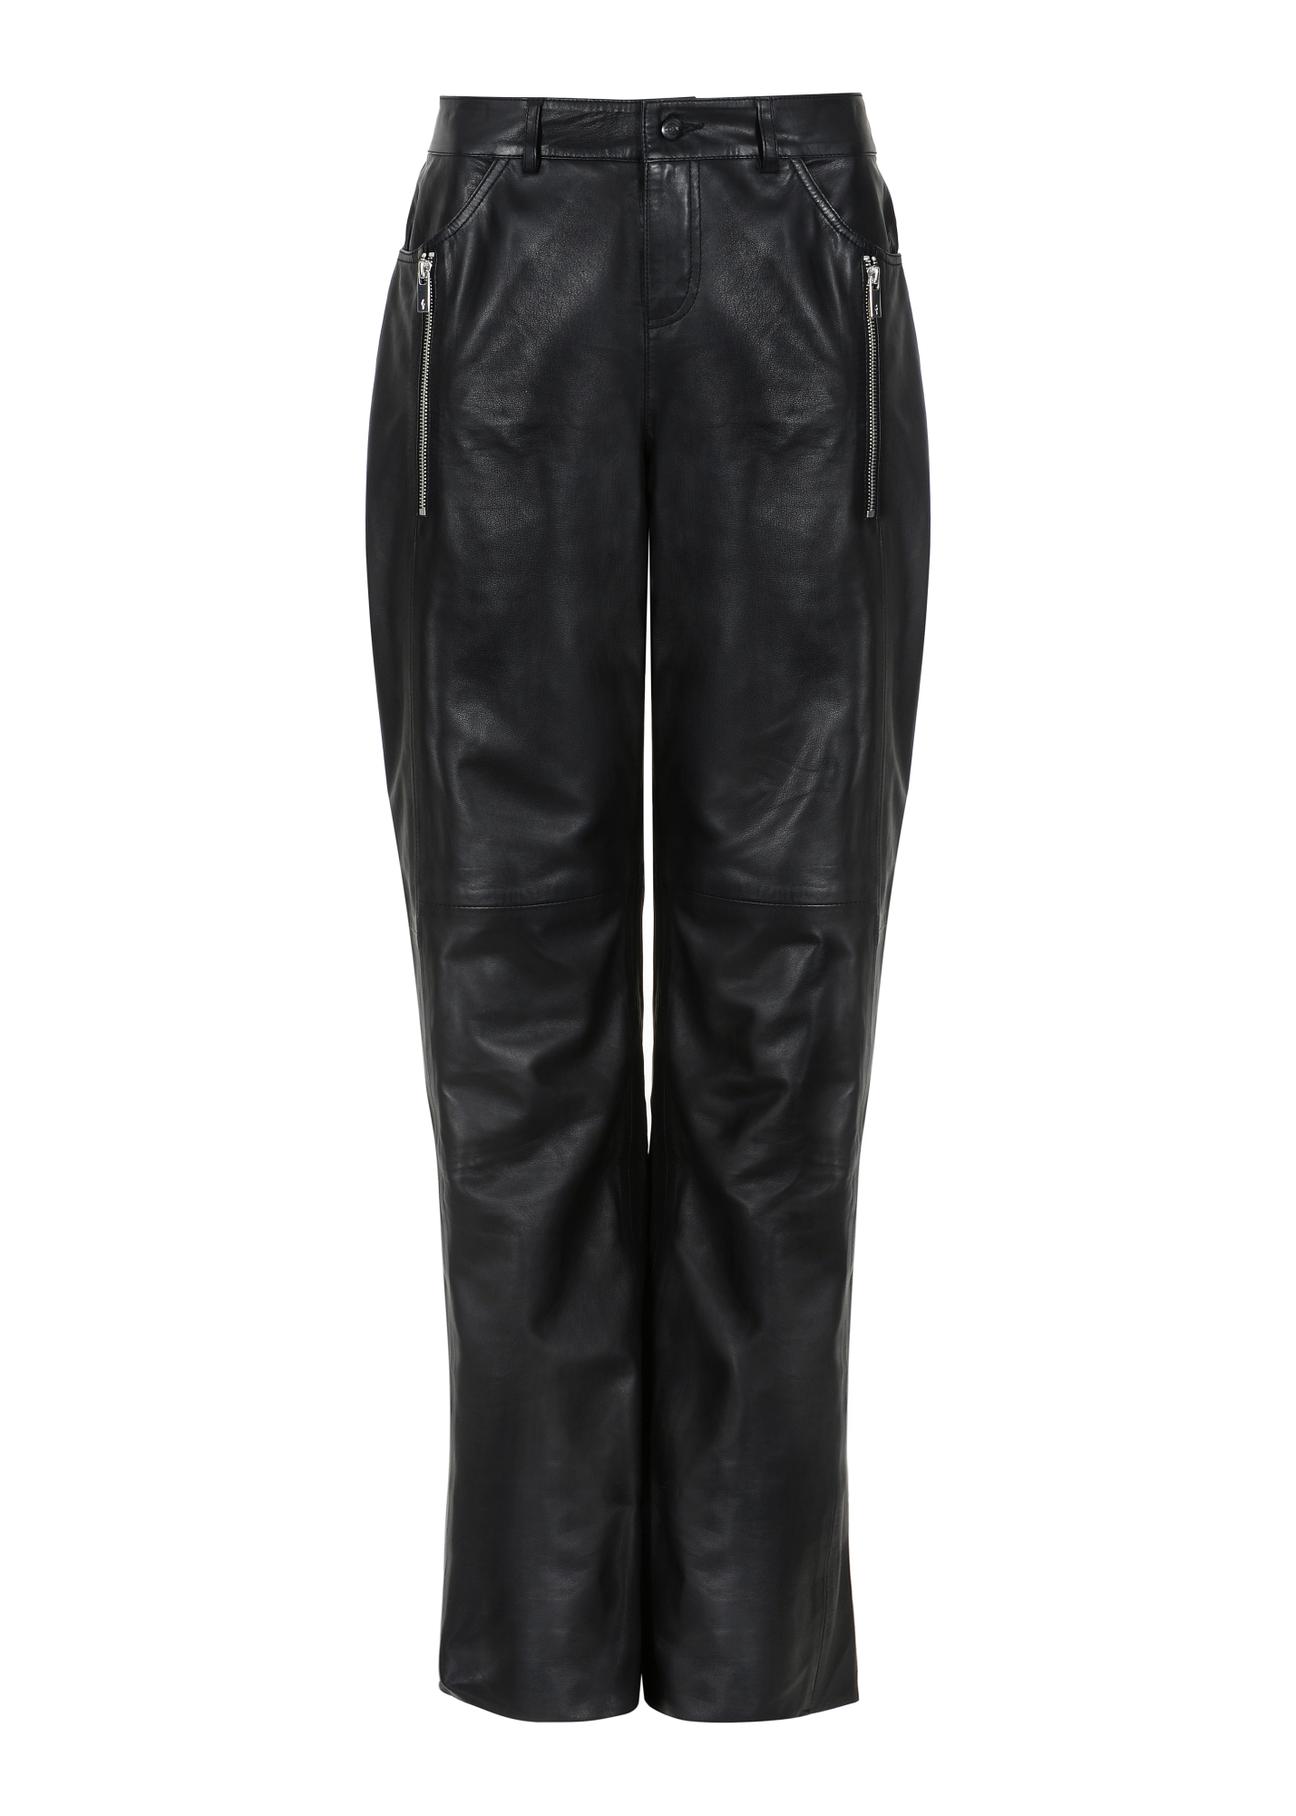 Czarne skórzane spodnie damskie SPODS-0036-5339(Z23)